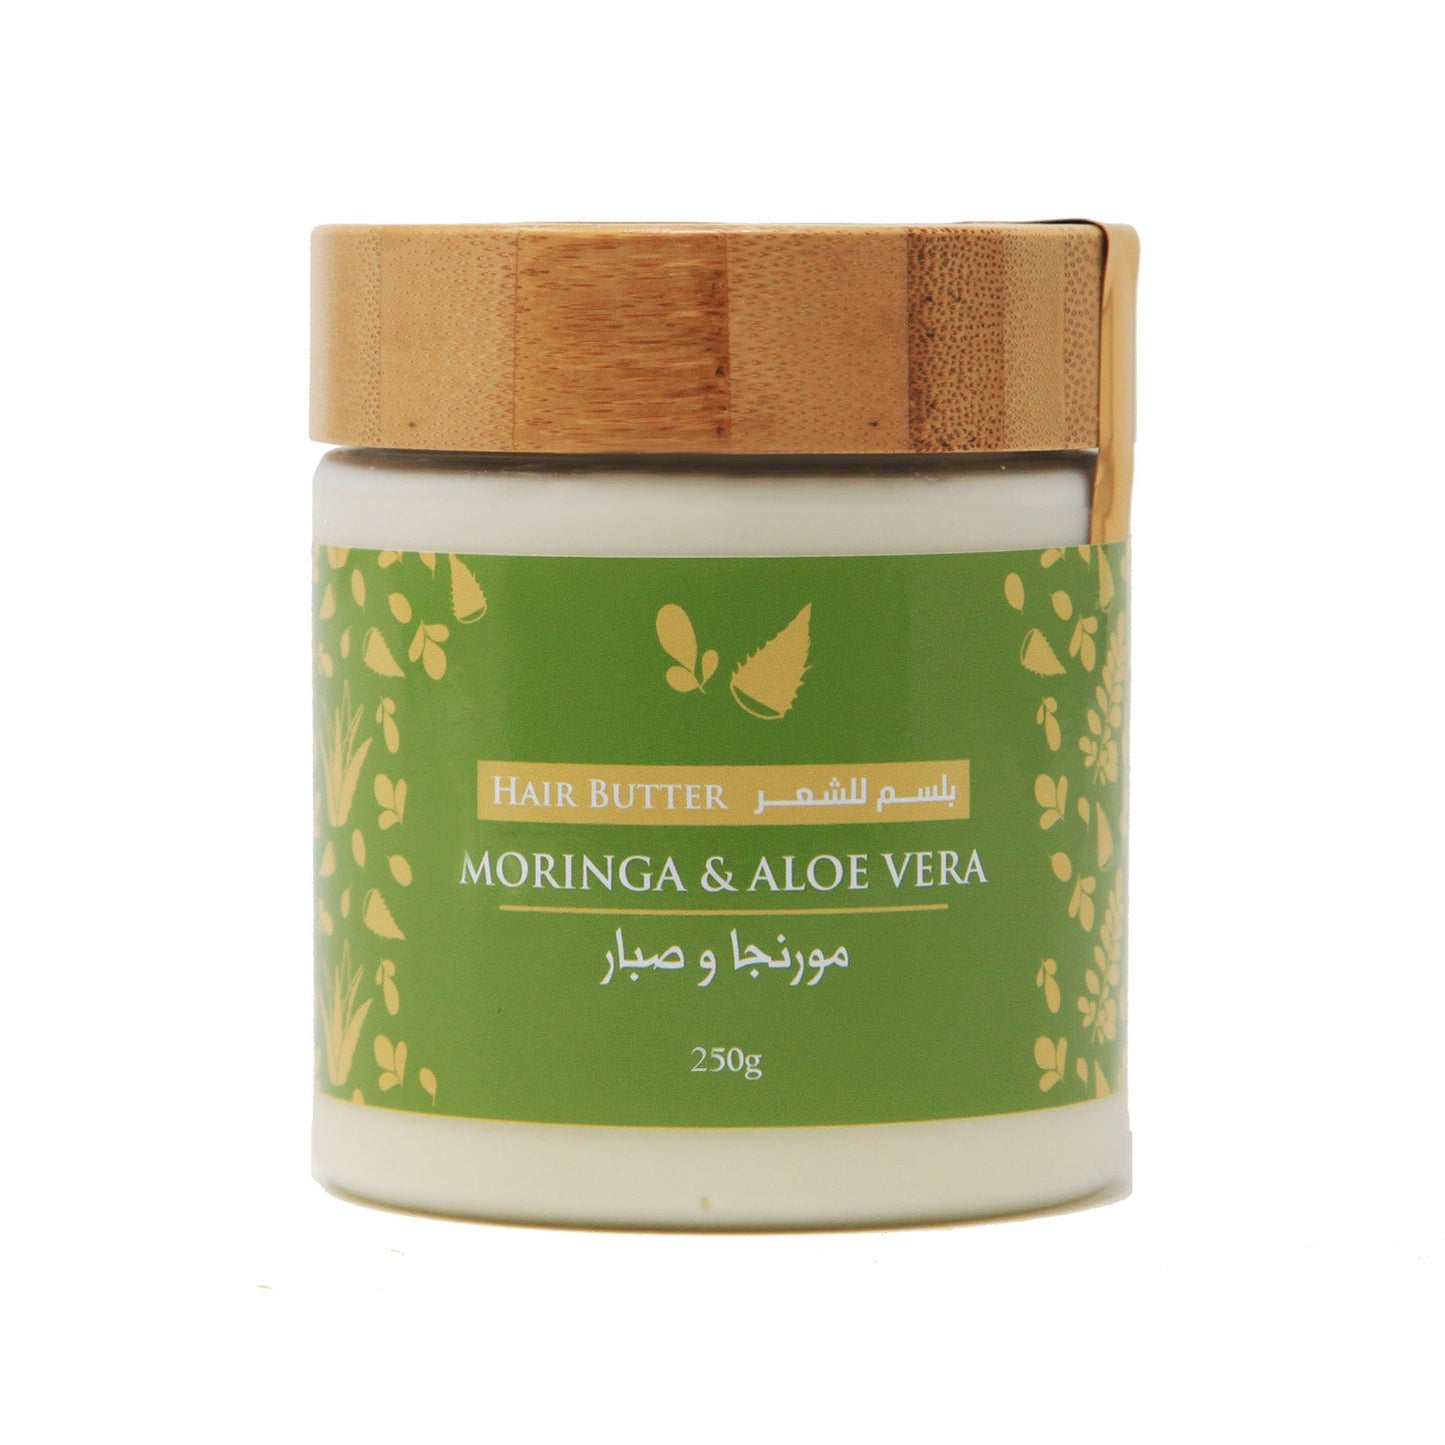 Moringa and Aloe Vera Hair Butter - 250g